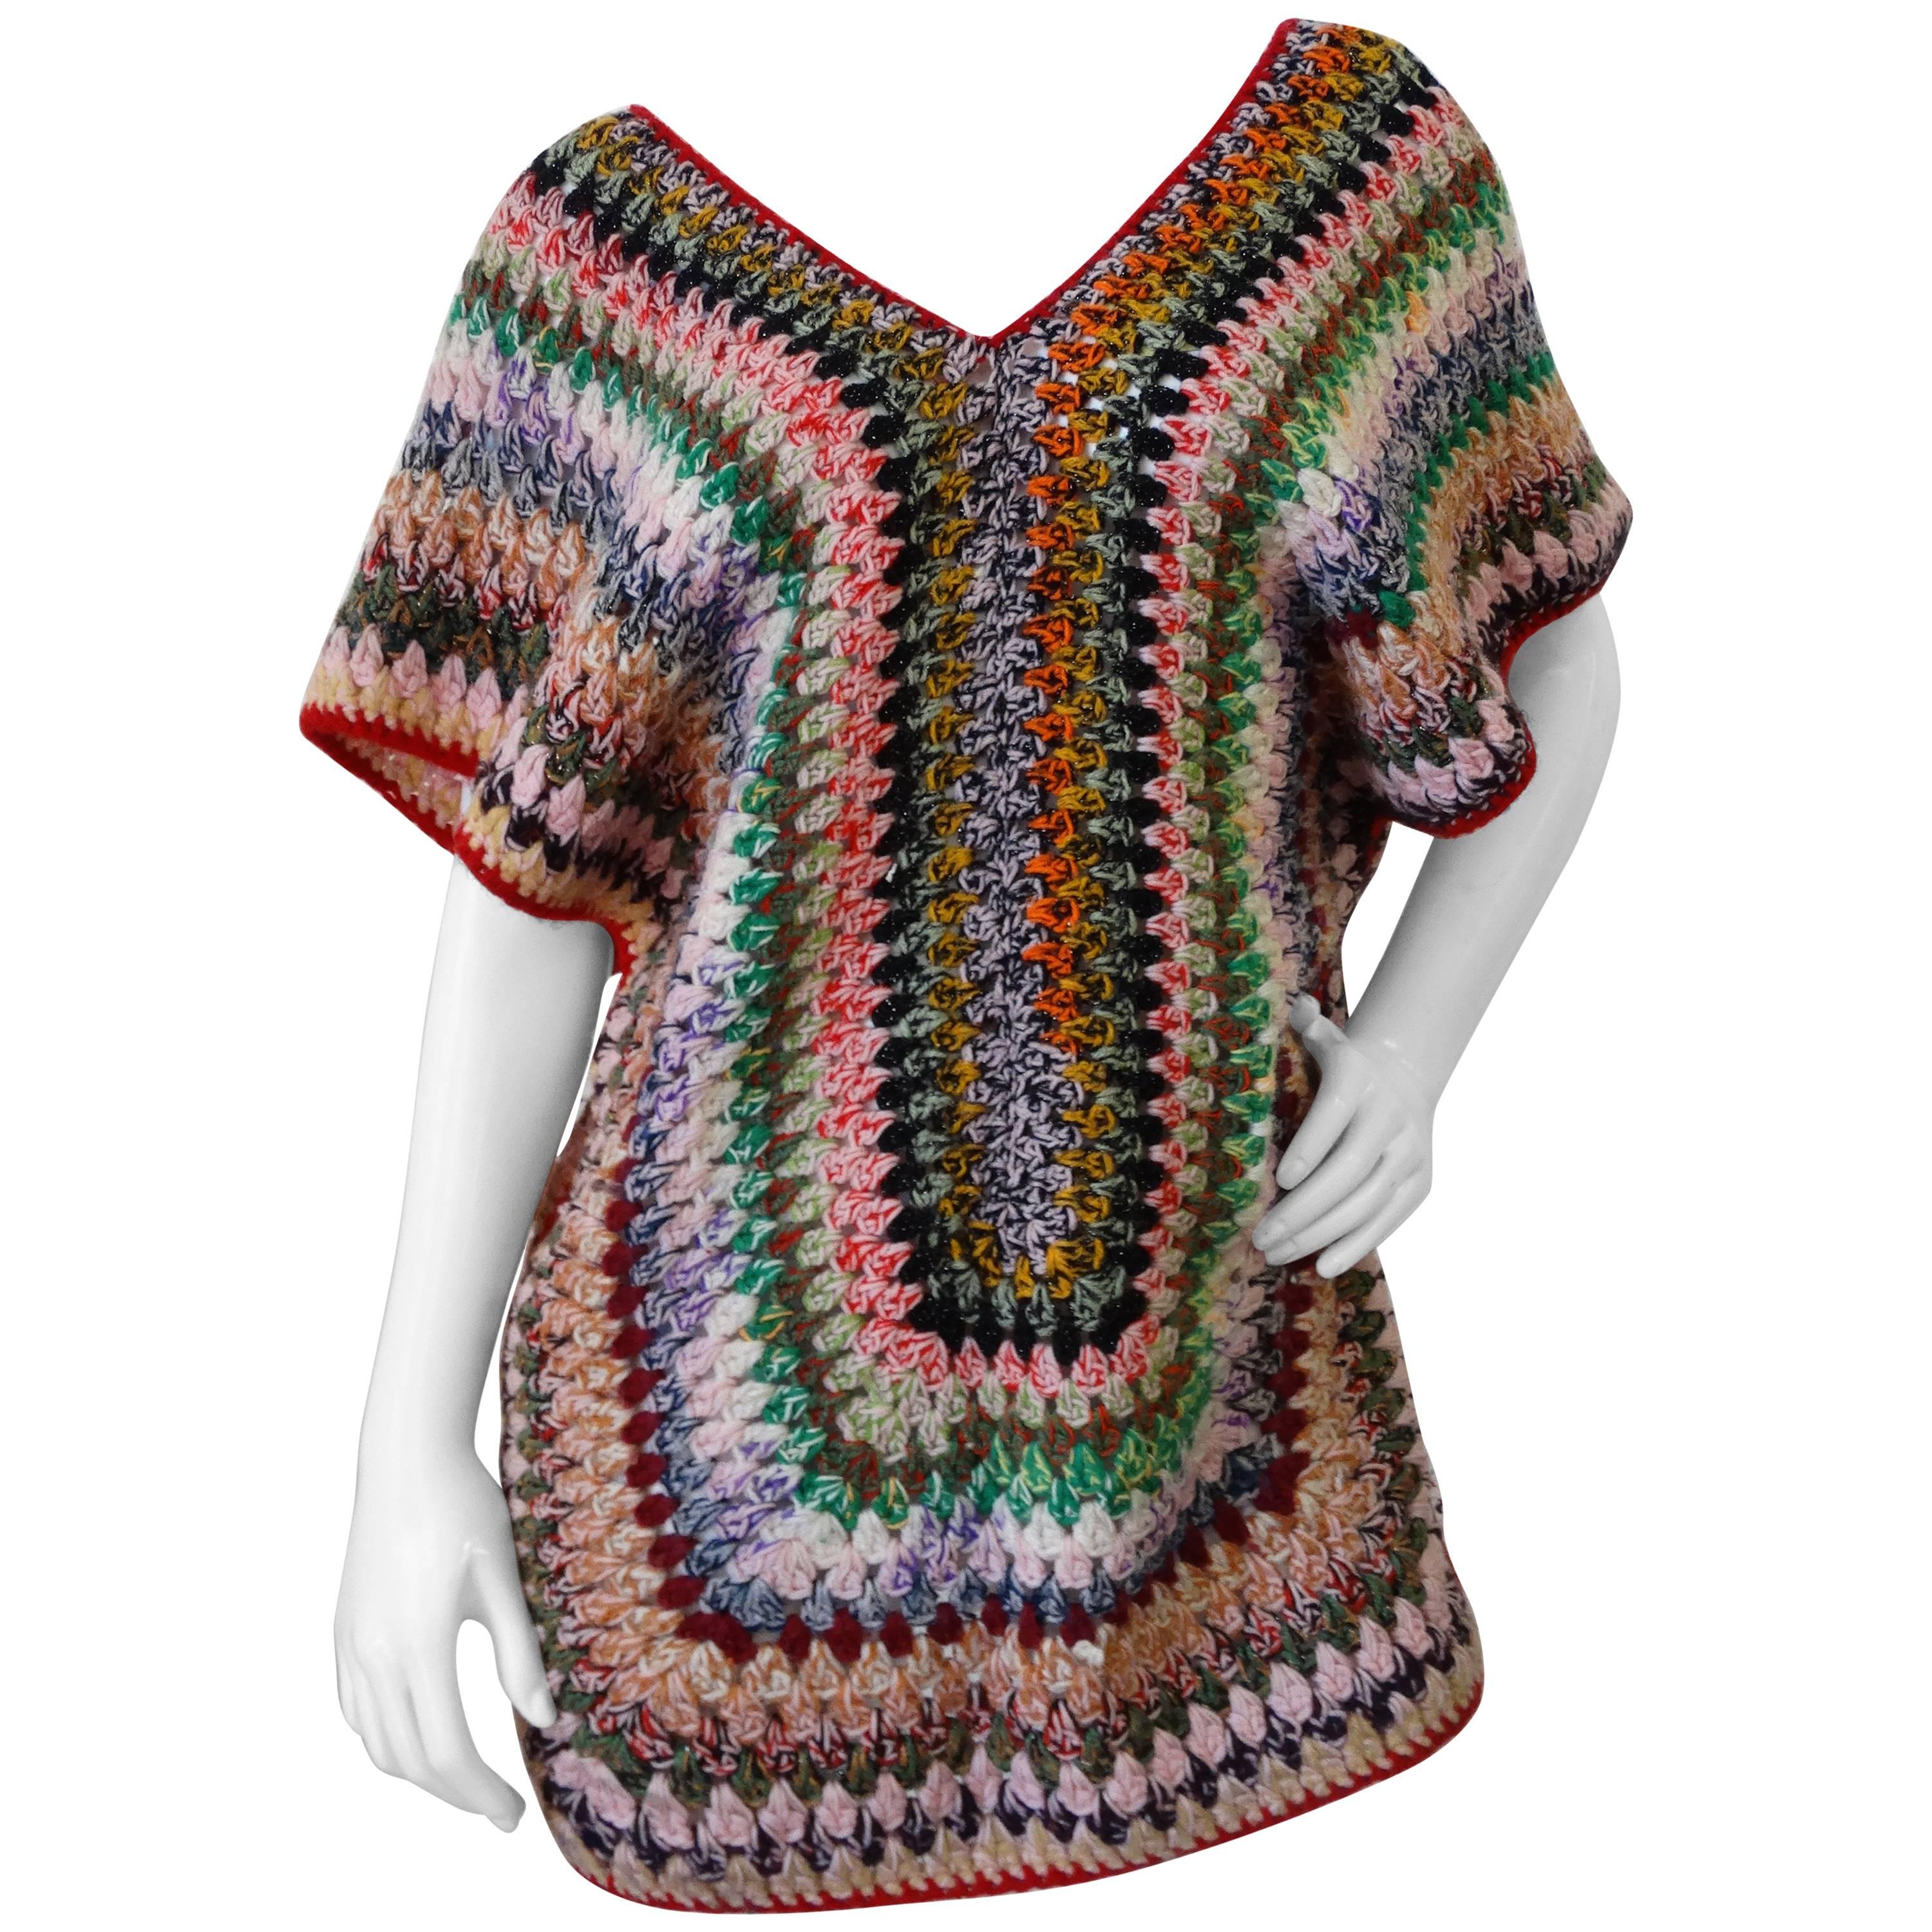 Chic 1970s Bohemian Multicolored Knit Poncho Top